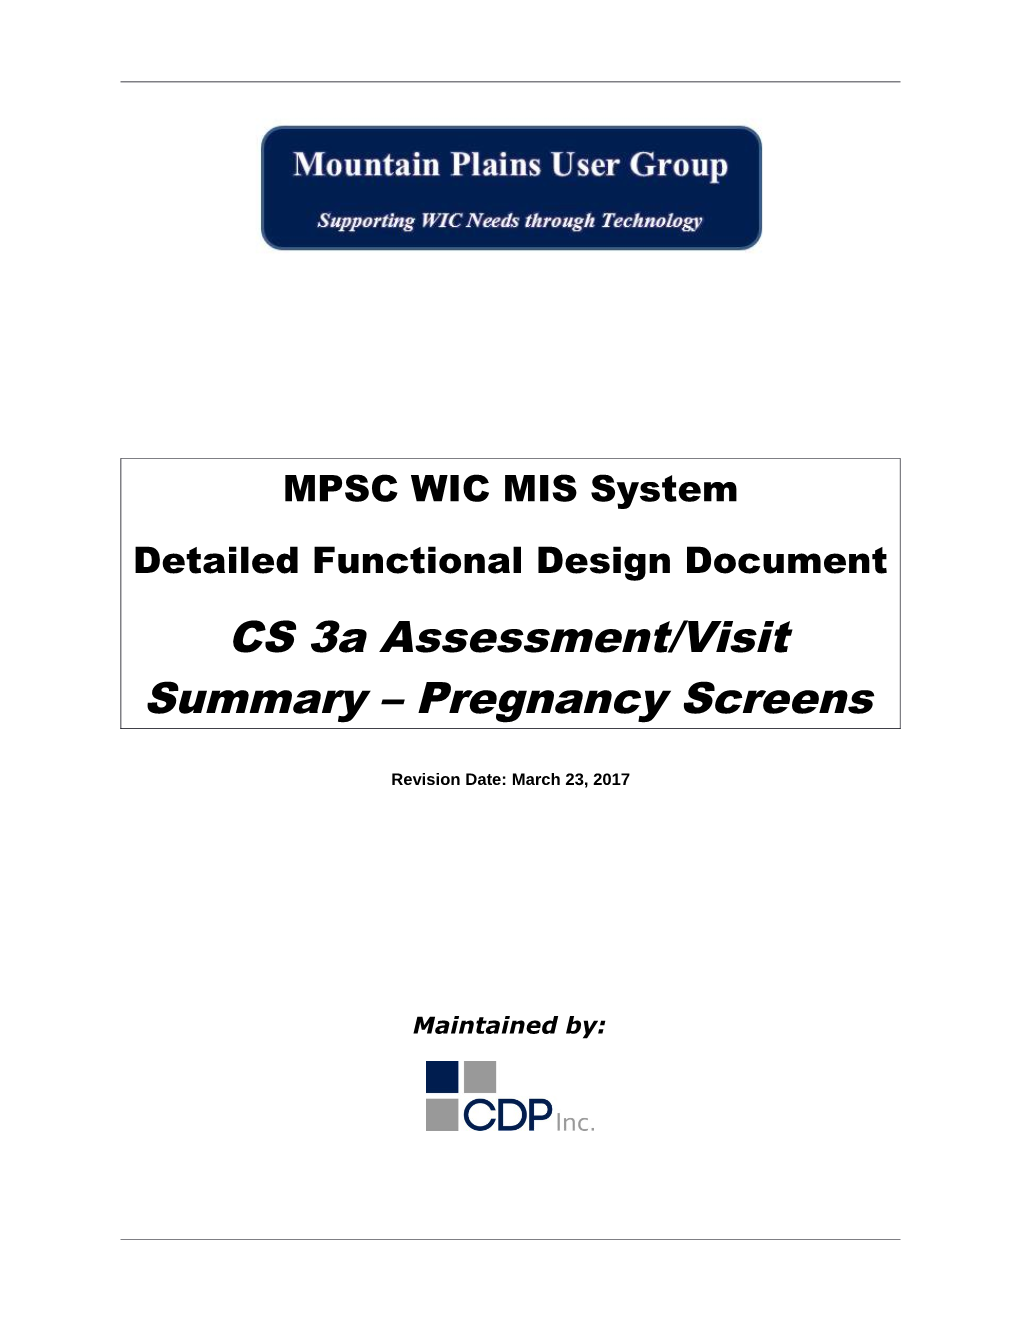 MPSC WIC MIS System CS 3A Assessment/Visit Summary Pregnancy Screens DFDD